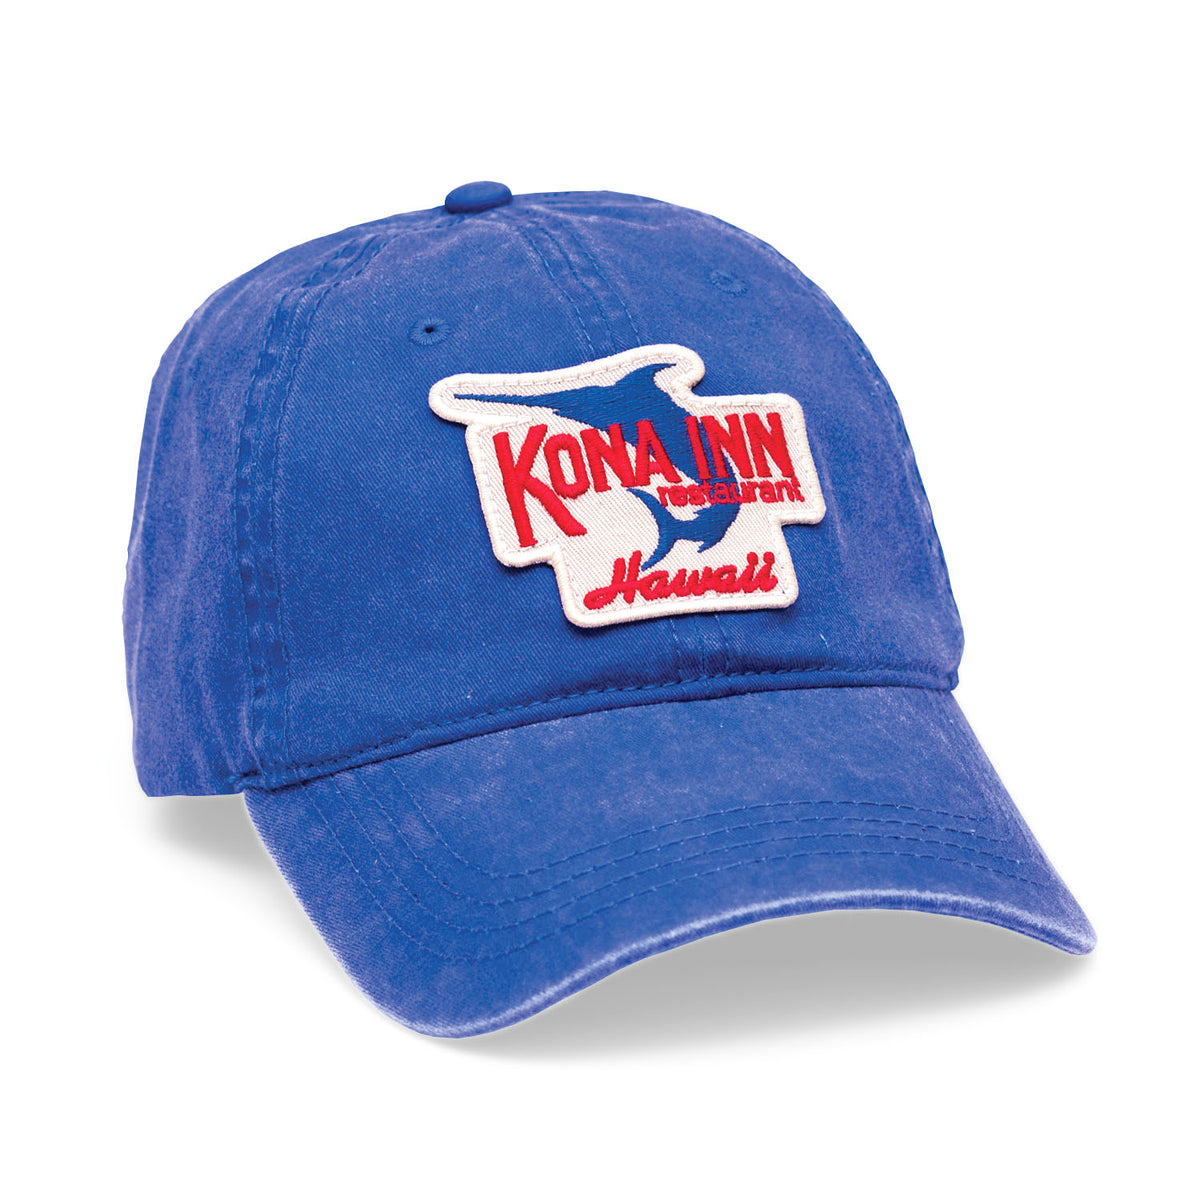 Kona Inn Adjustable Cap